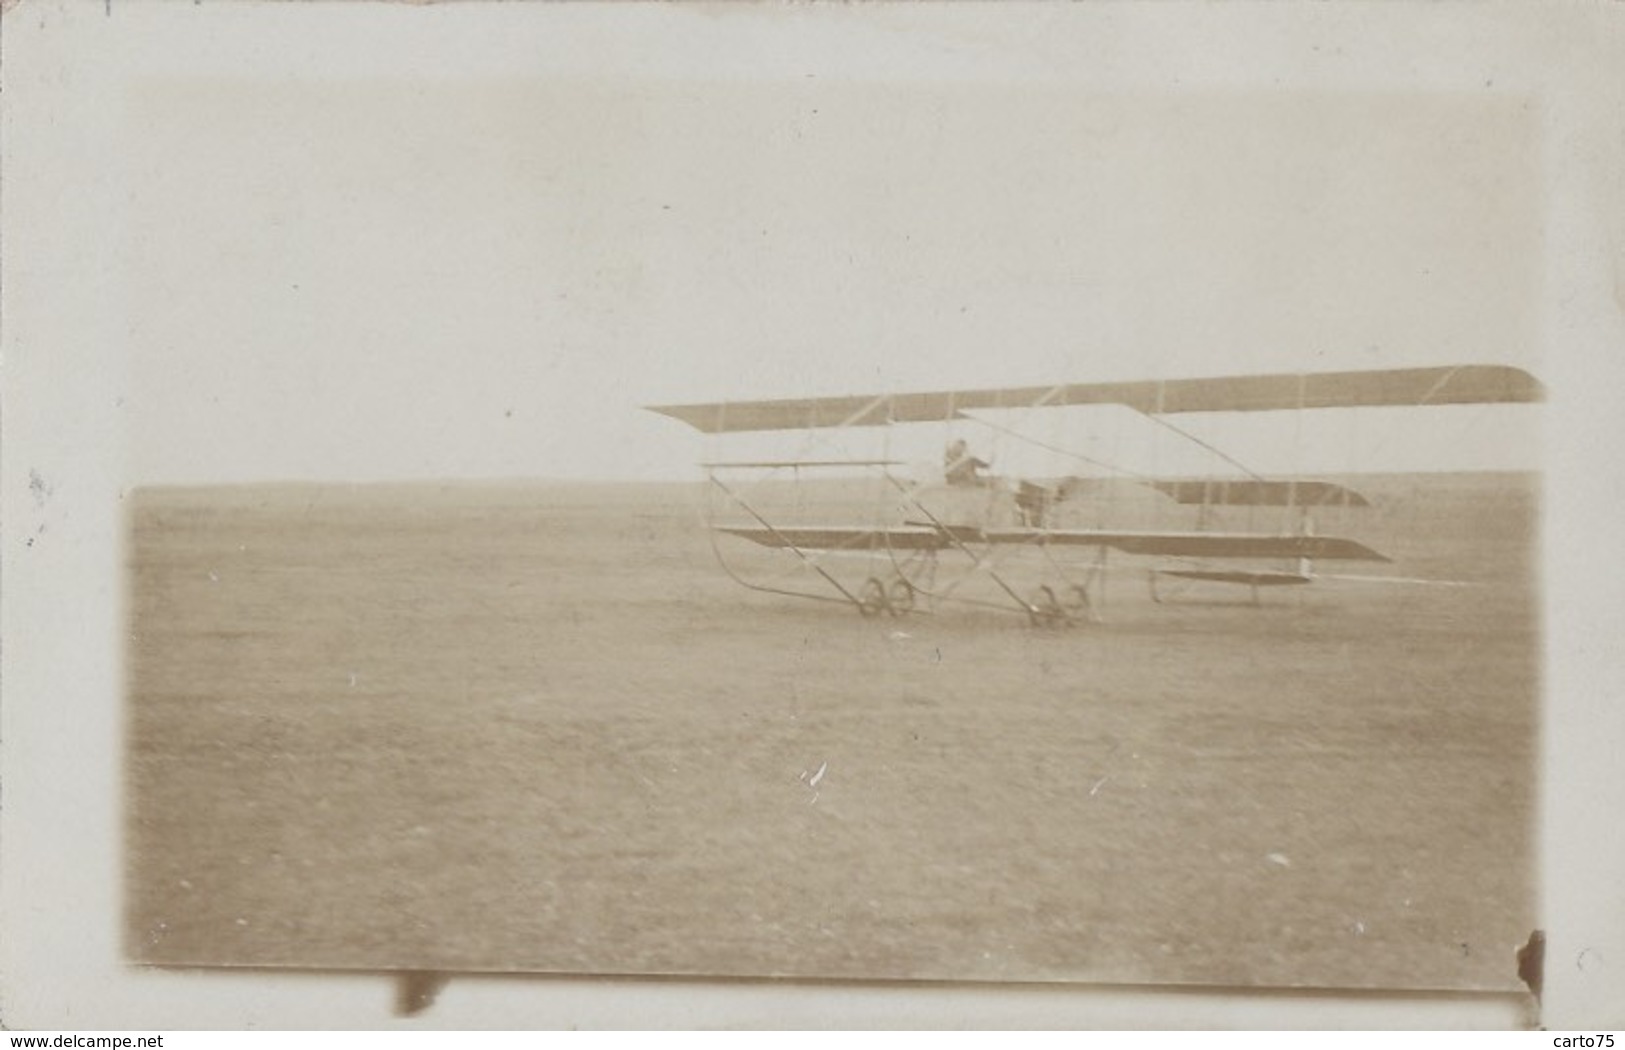 Aviation - Carte-Photo - Avion Biplan Farman - ....-1914: Vorläufer